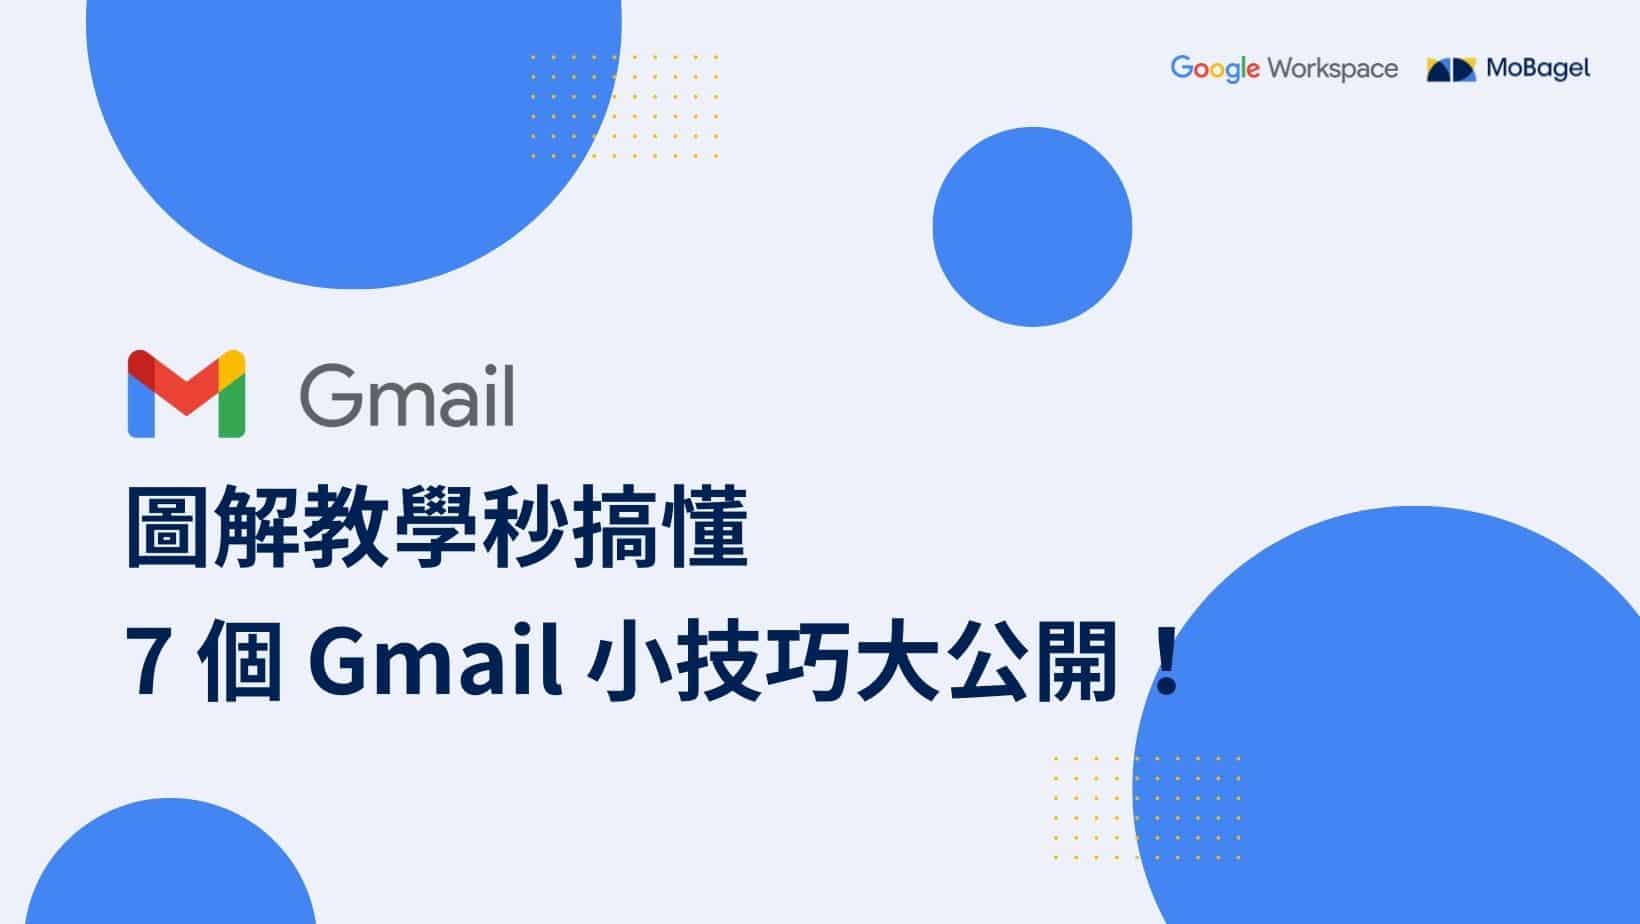 Gmail-top